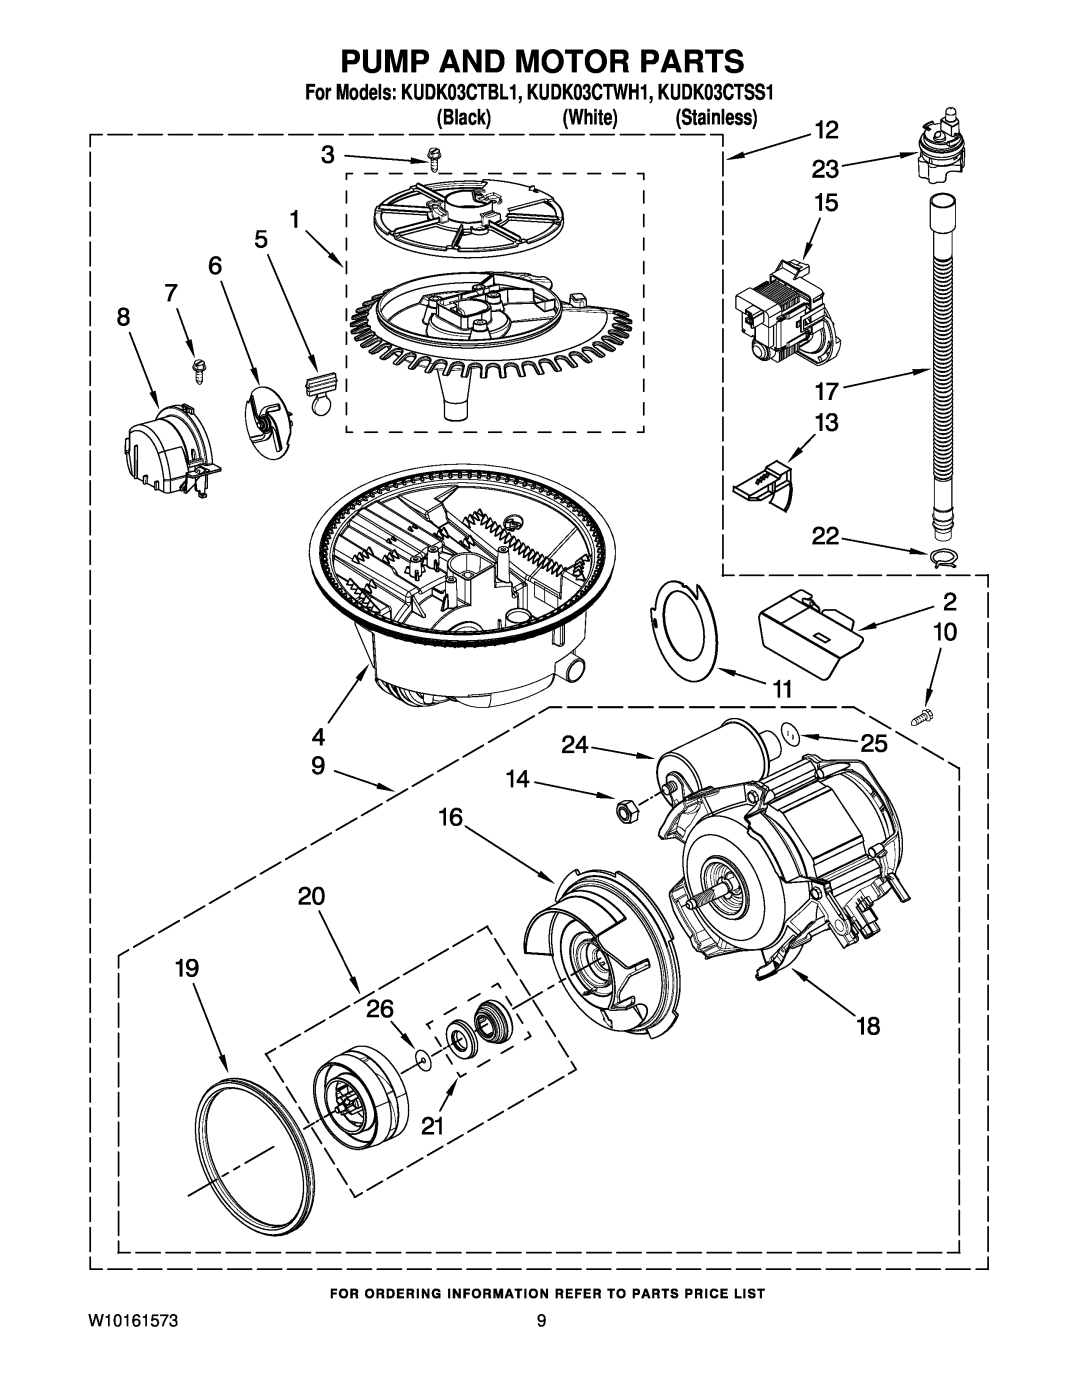 KitchenAid manual Pump And Motor Parts, For Models KUDK03CTBL1, KUDK03CTWH1, KUDK03CTSS1, Black White Stainless 